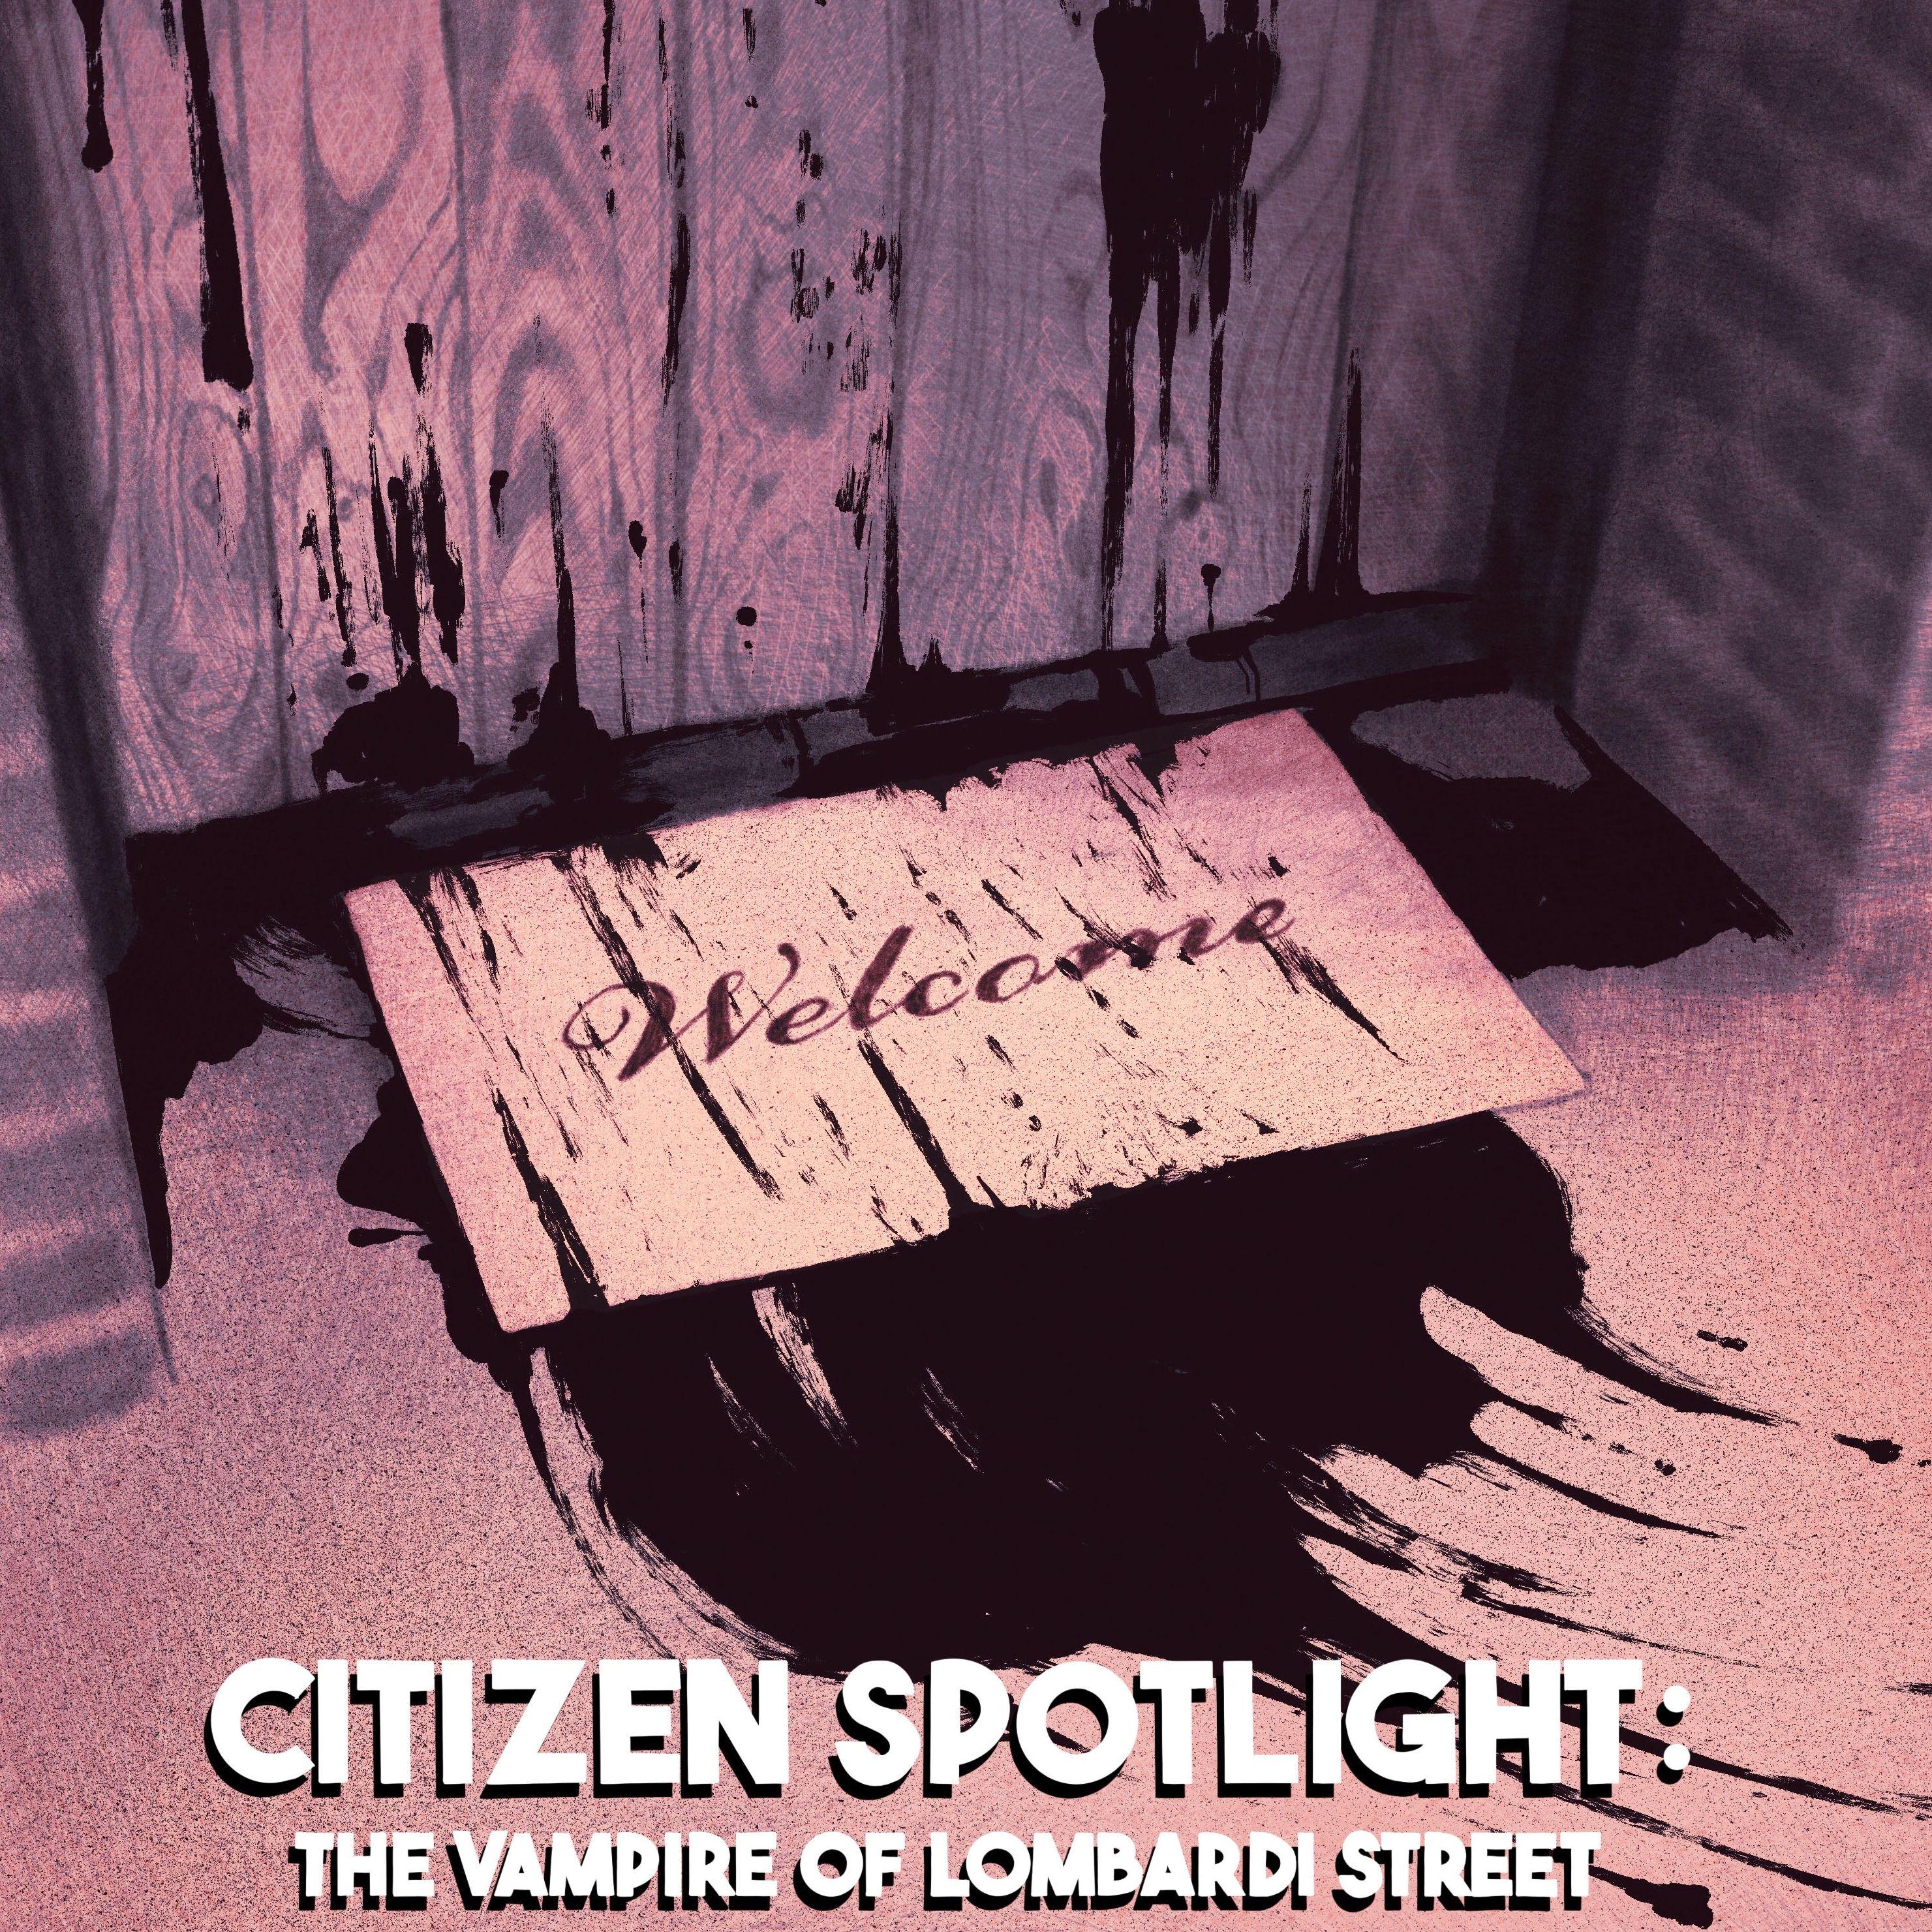 Thumbnail for "233 - Citizen Spotlight: The Vampire of Lombardi Street".